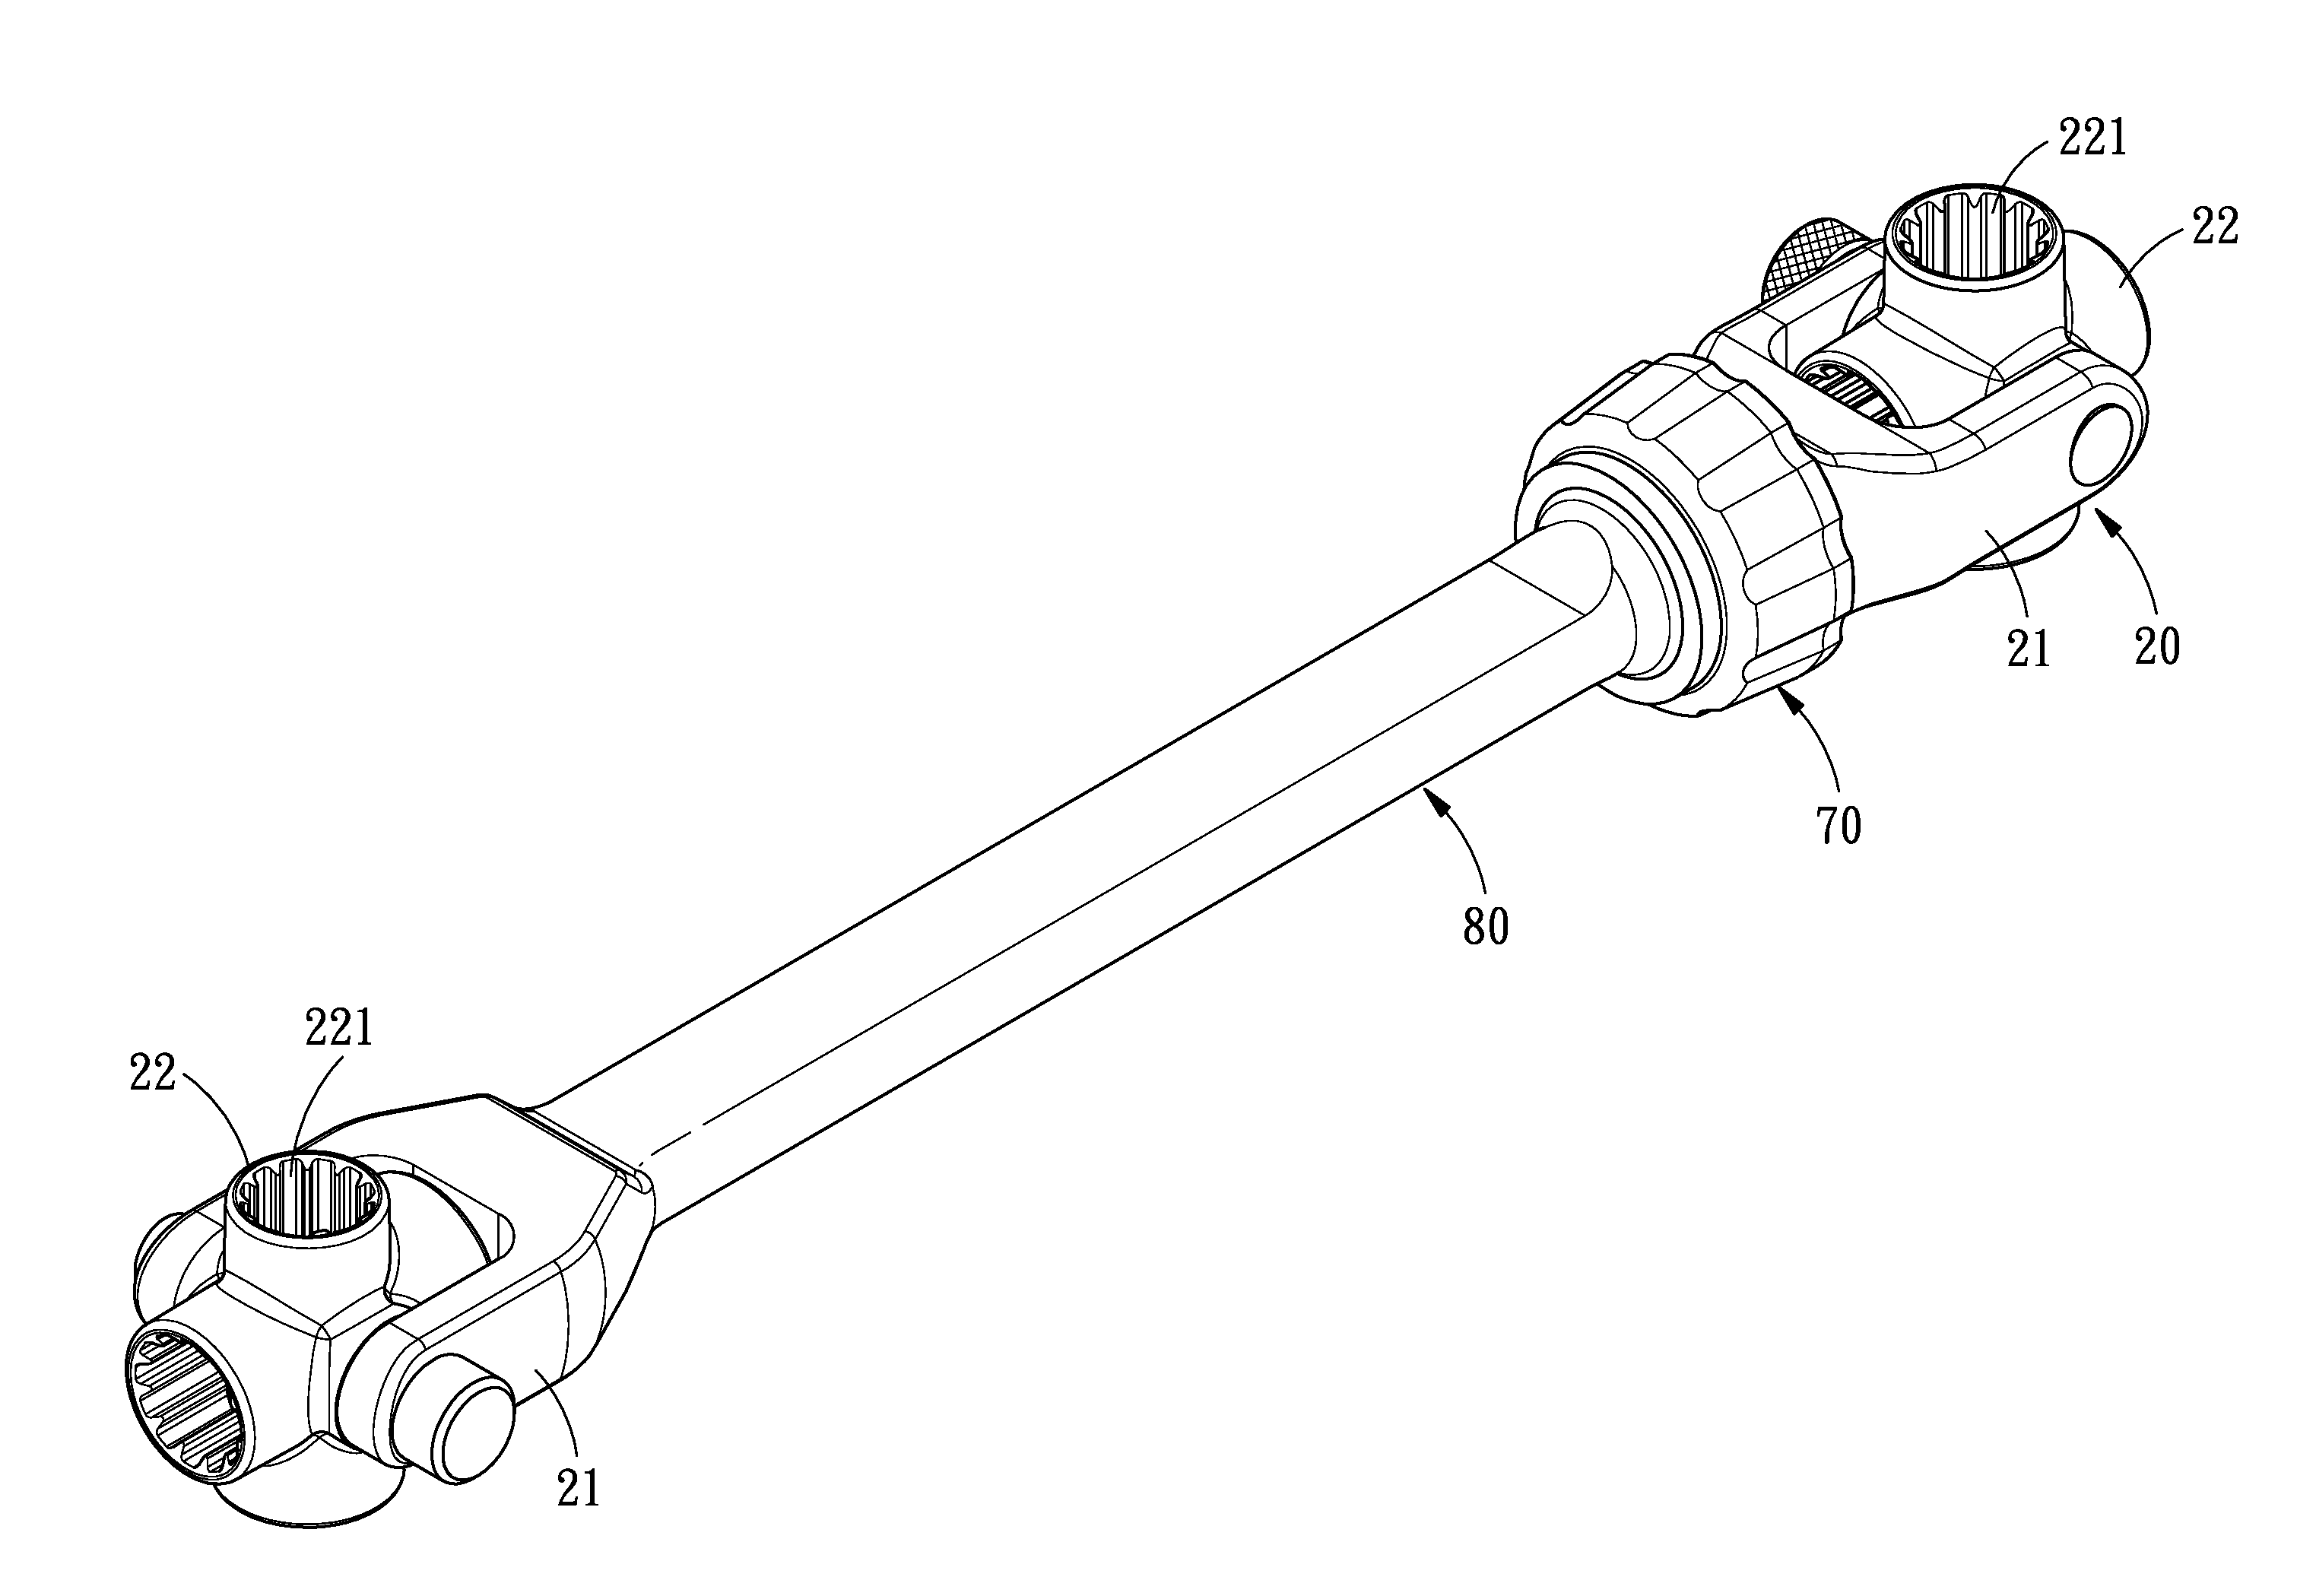 Multi-size ratchet socket wrench